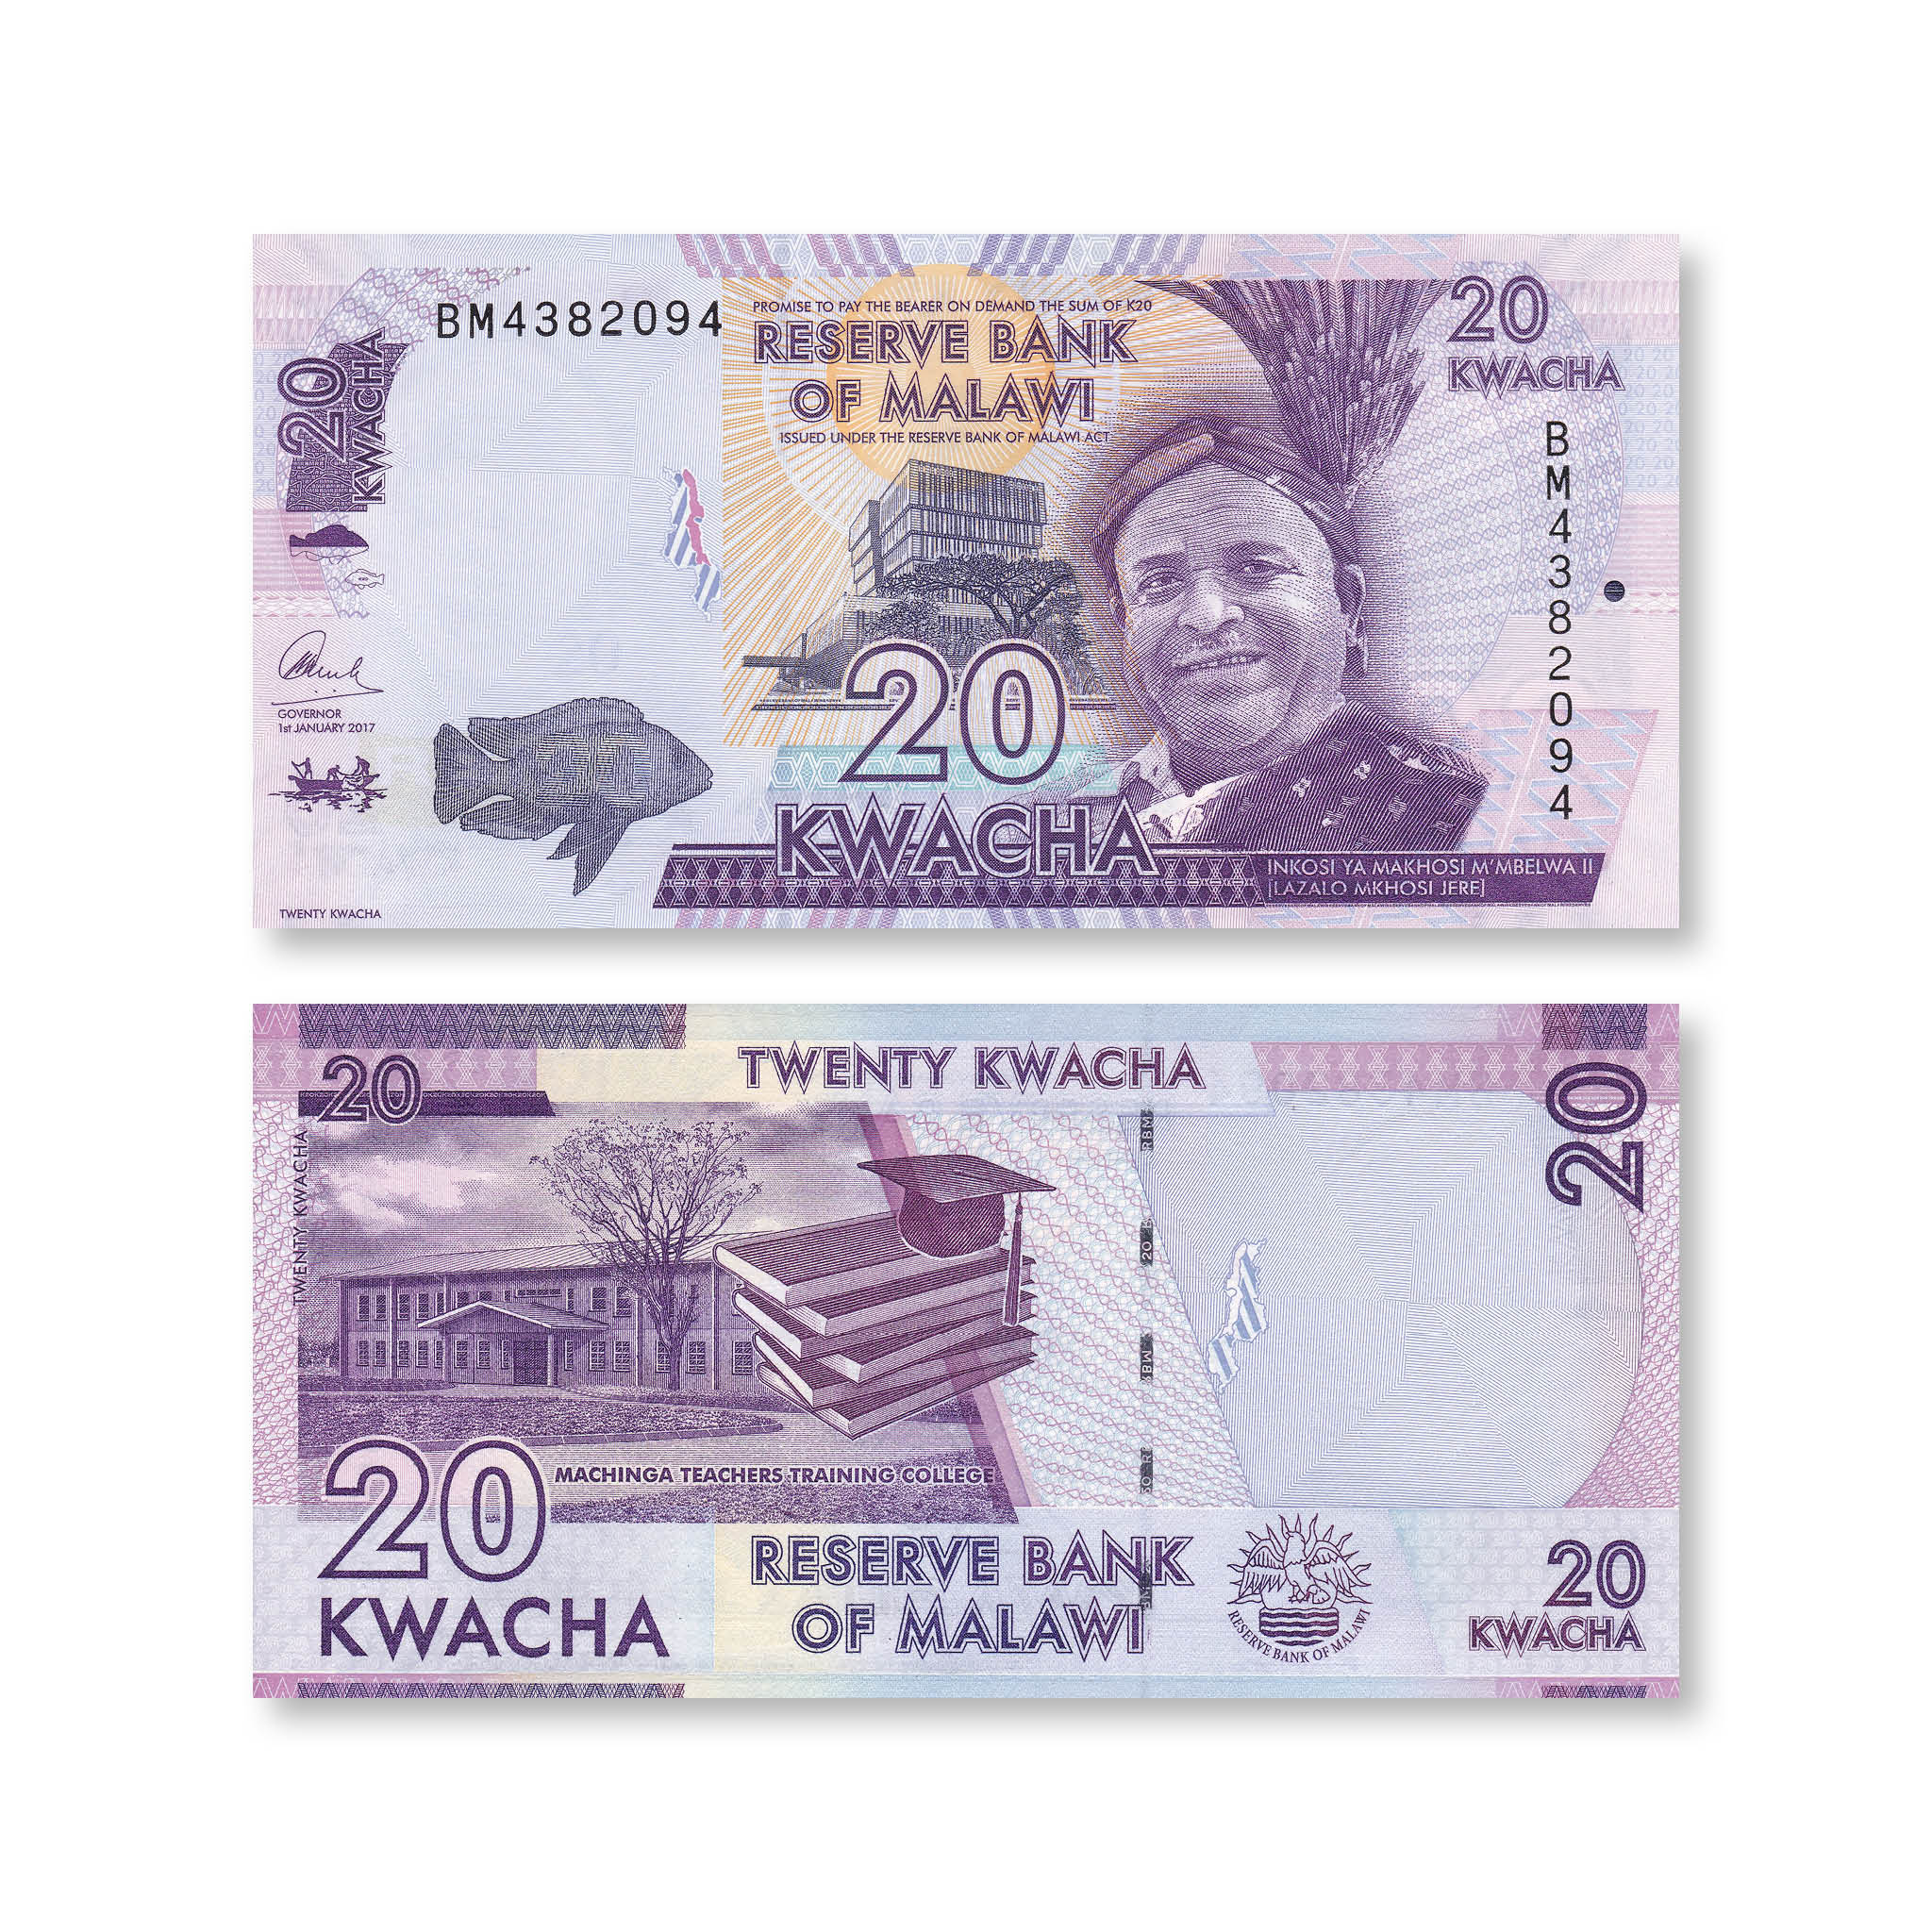 Malawi 20 Kwacha, 2017, B157d, P63d, UNC - Robert's World Money - World Banknotes